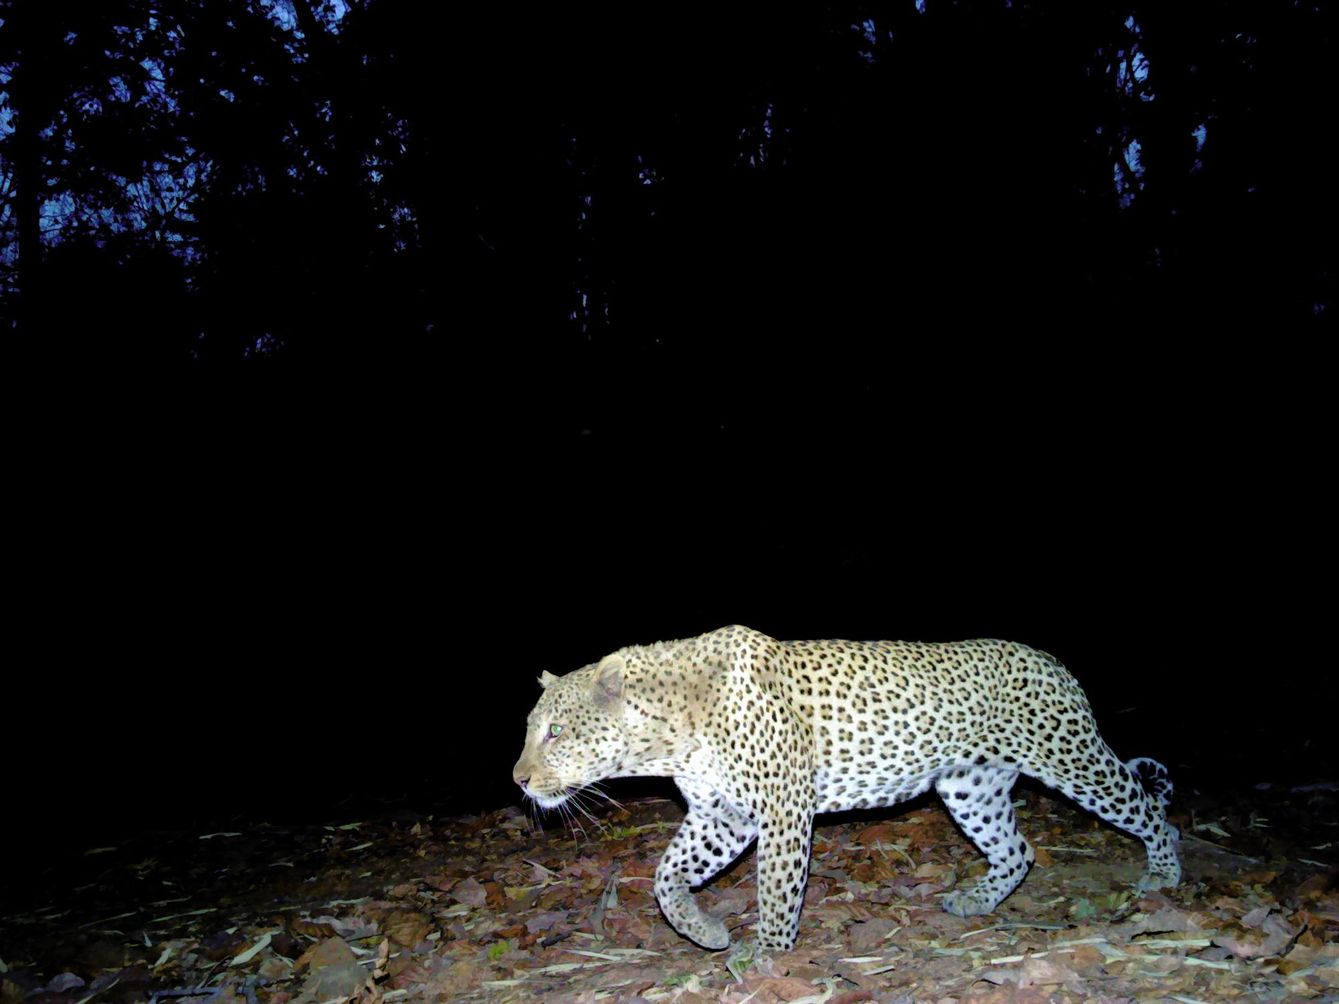 A leopard in Senegal's Niokolo Koba National Park